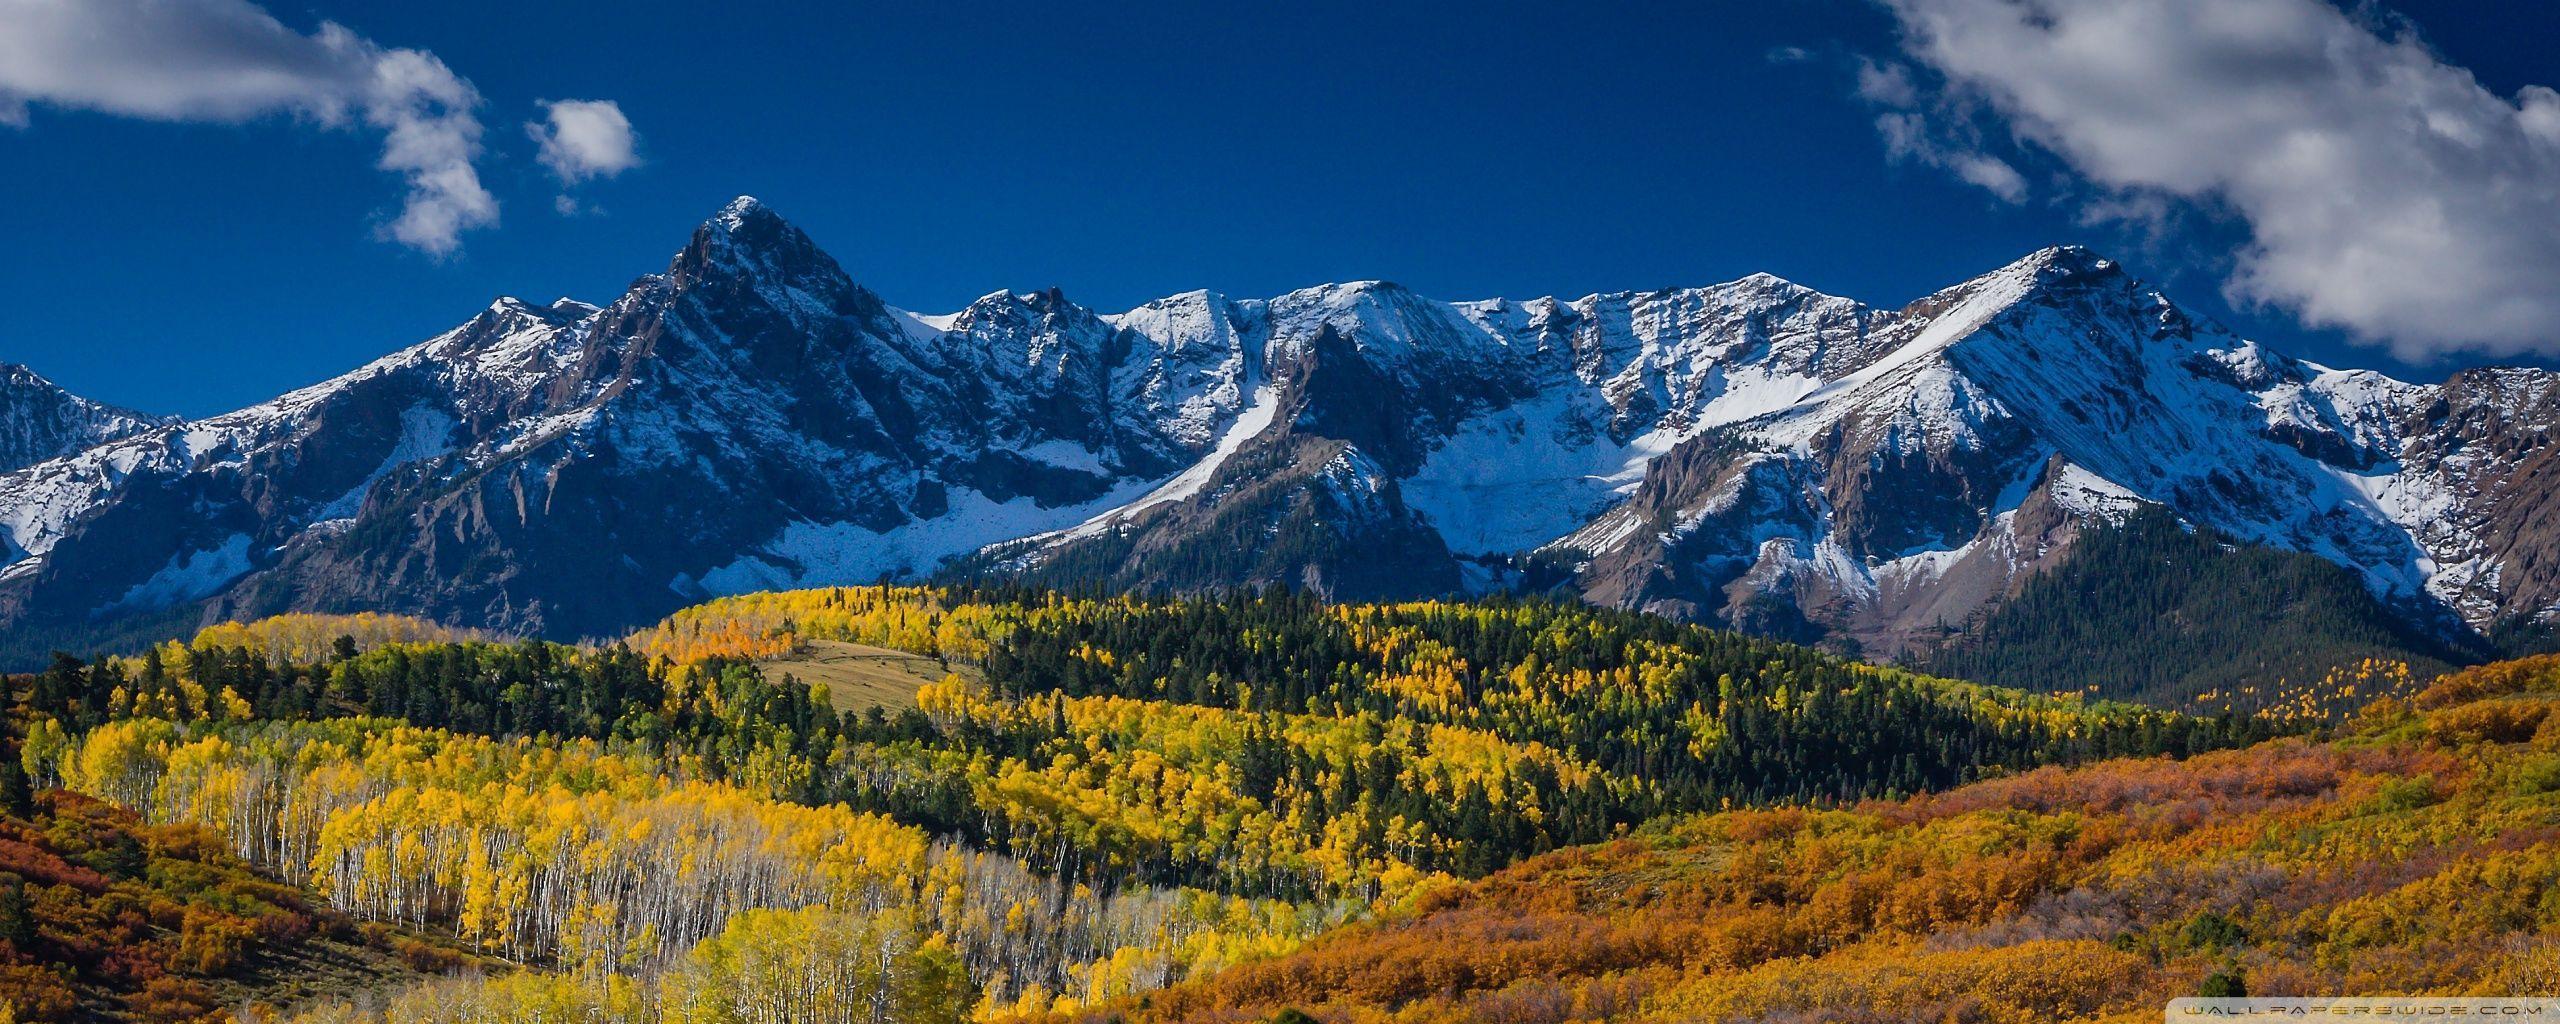 Mountain Landscape In Aspen Colorado Wallpaper